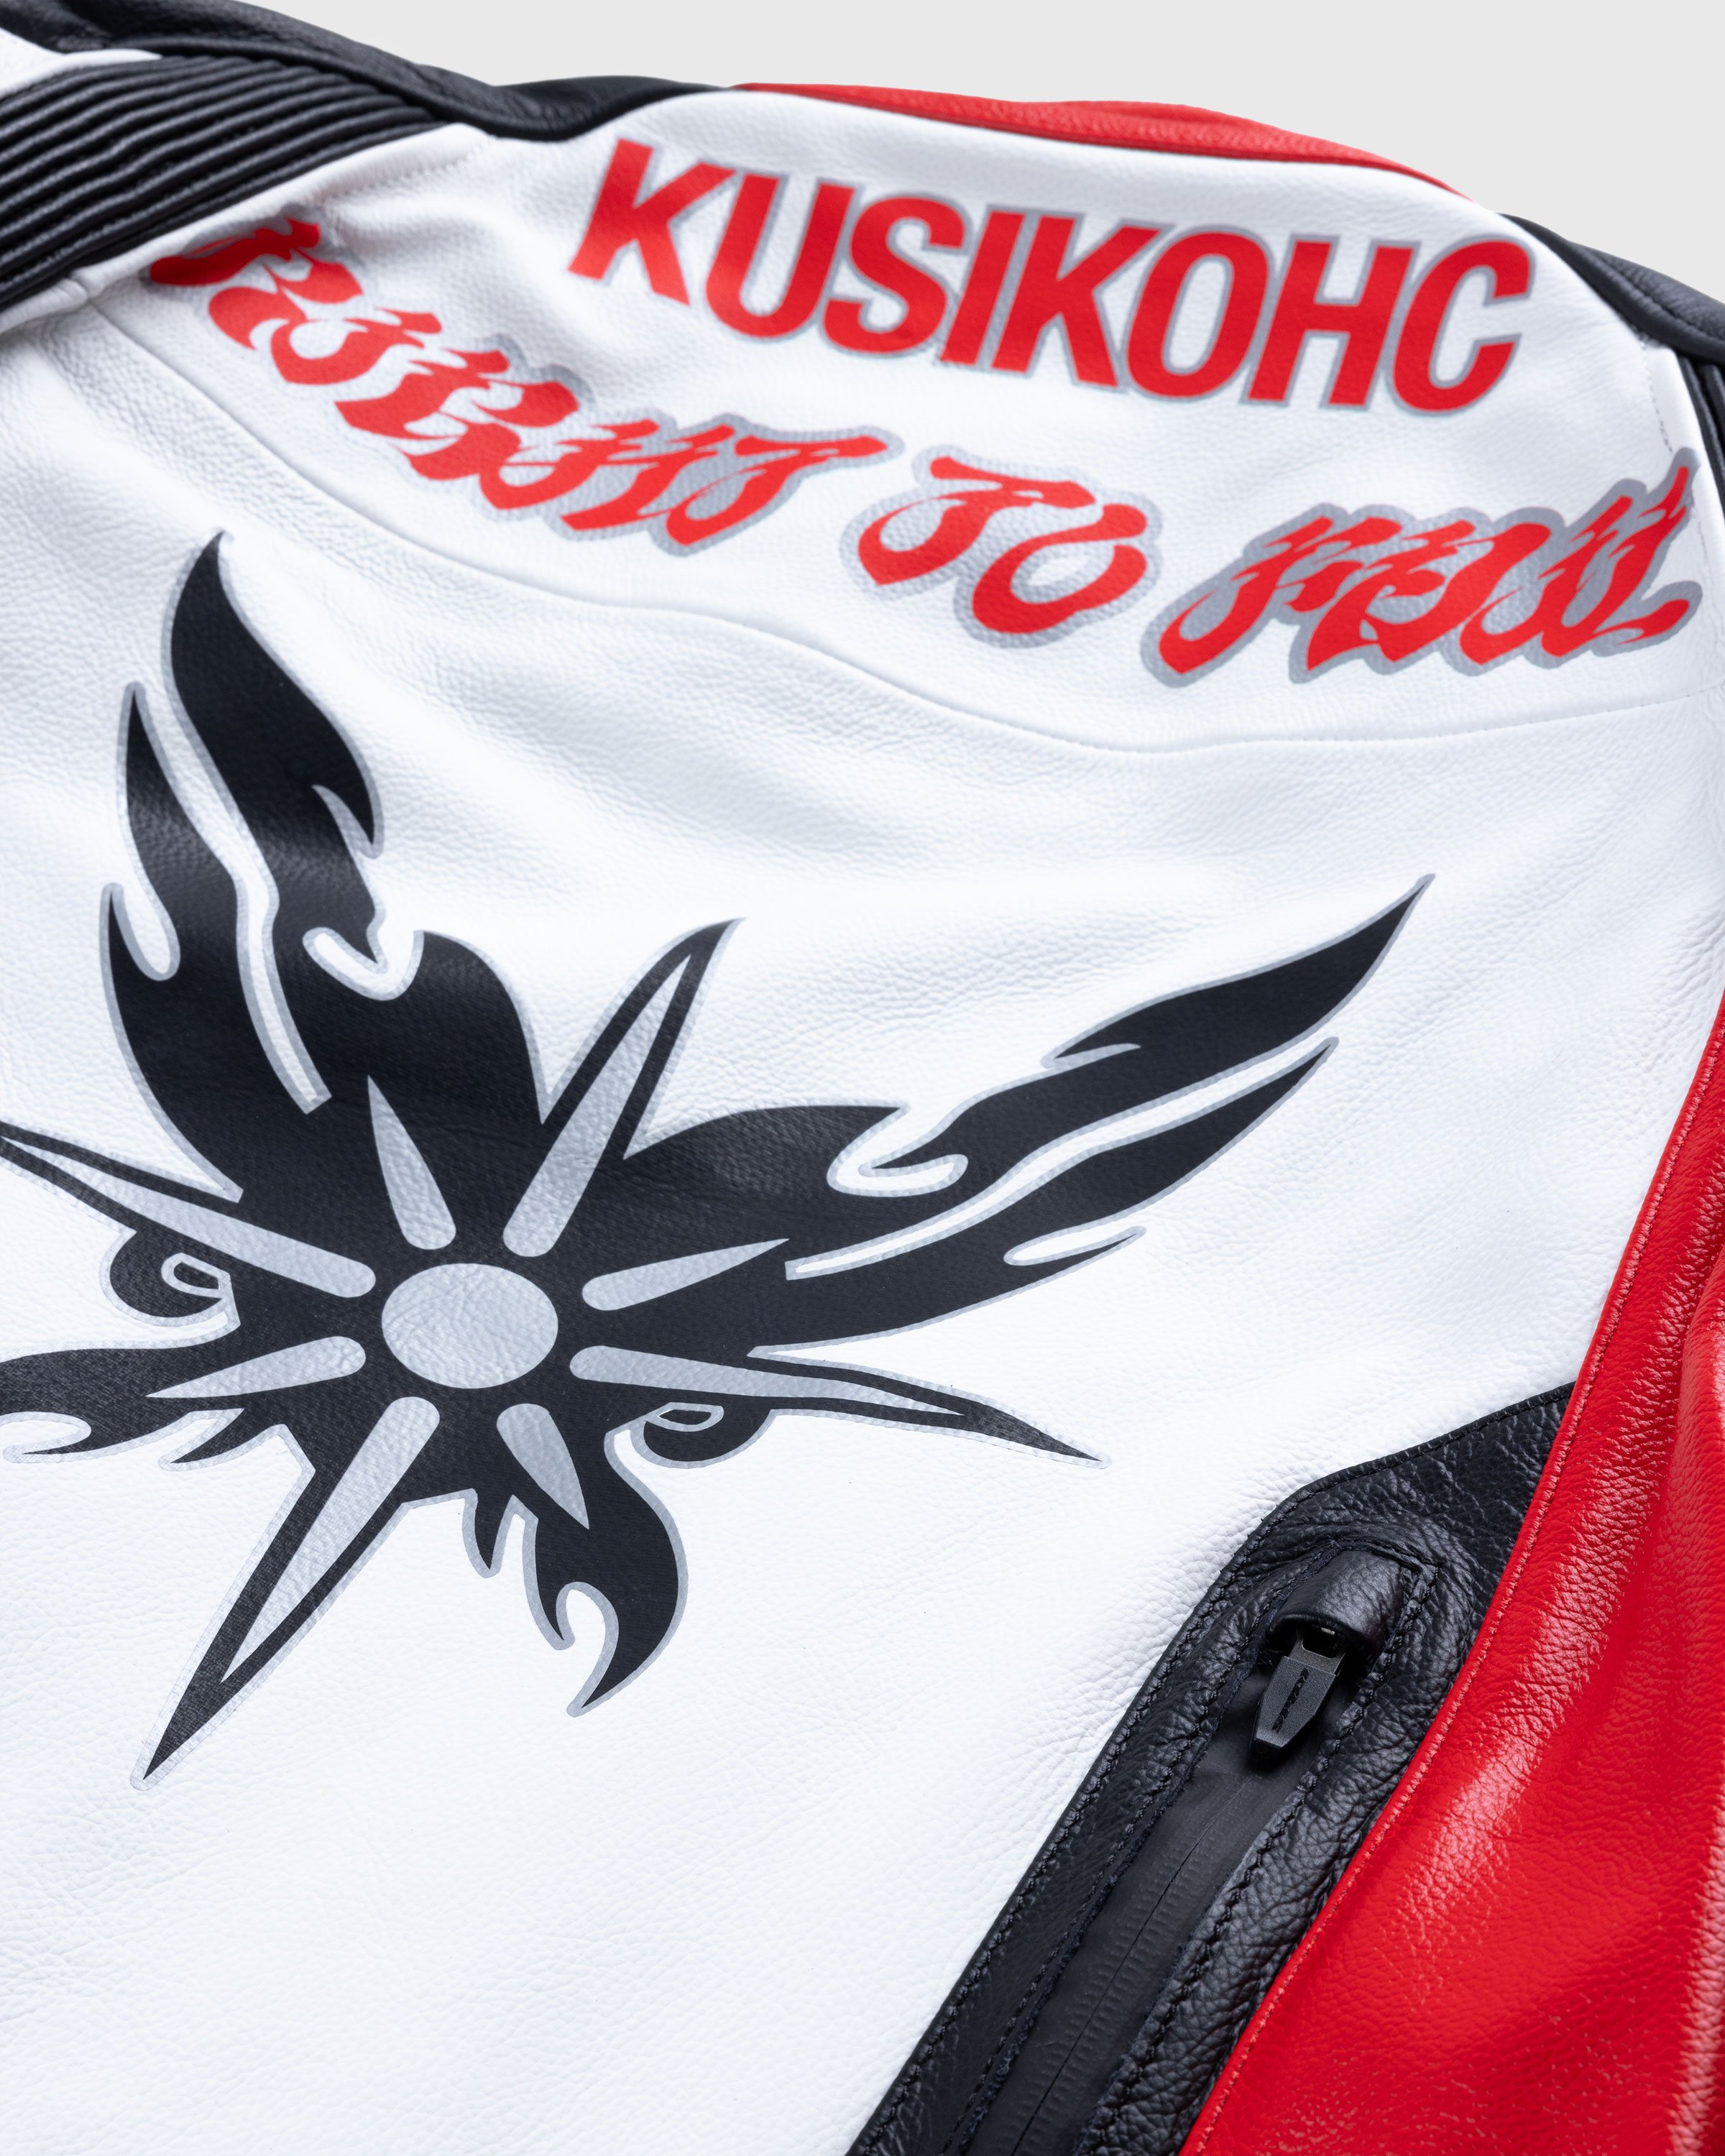 KUSIKOHC - Spidi Burn Rider Jacket Red - Clothing - RED - Image 7